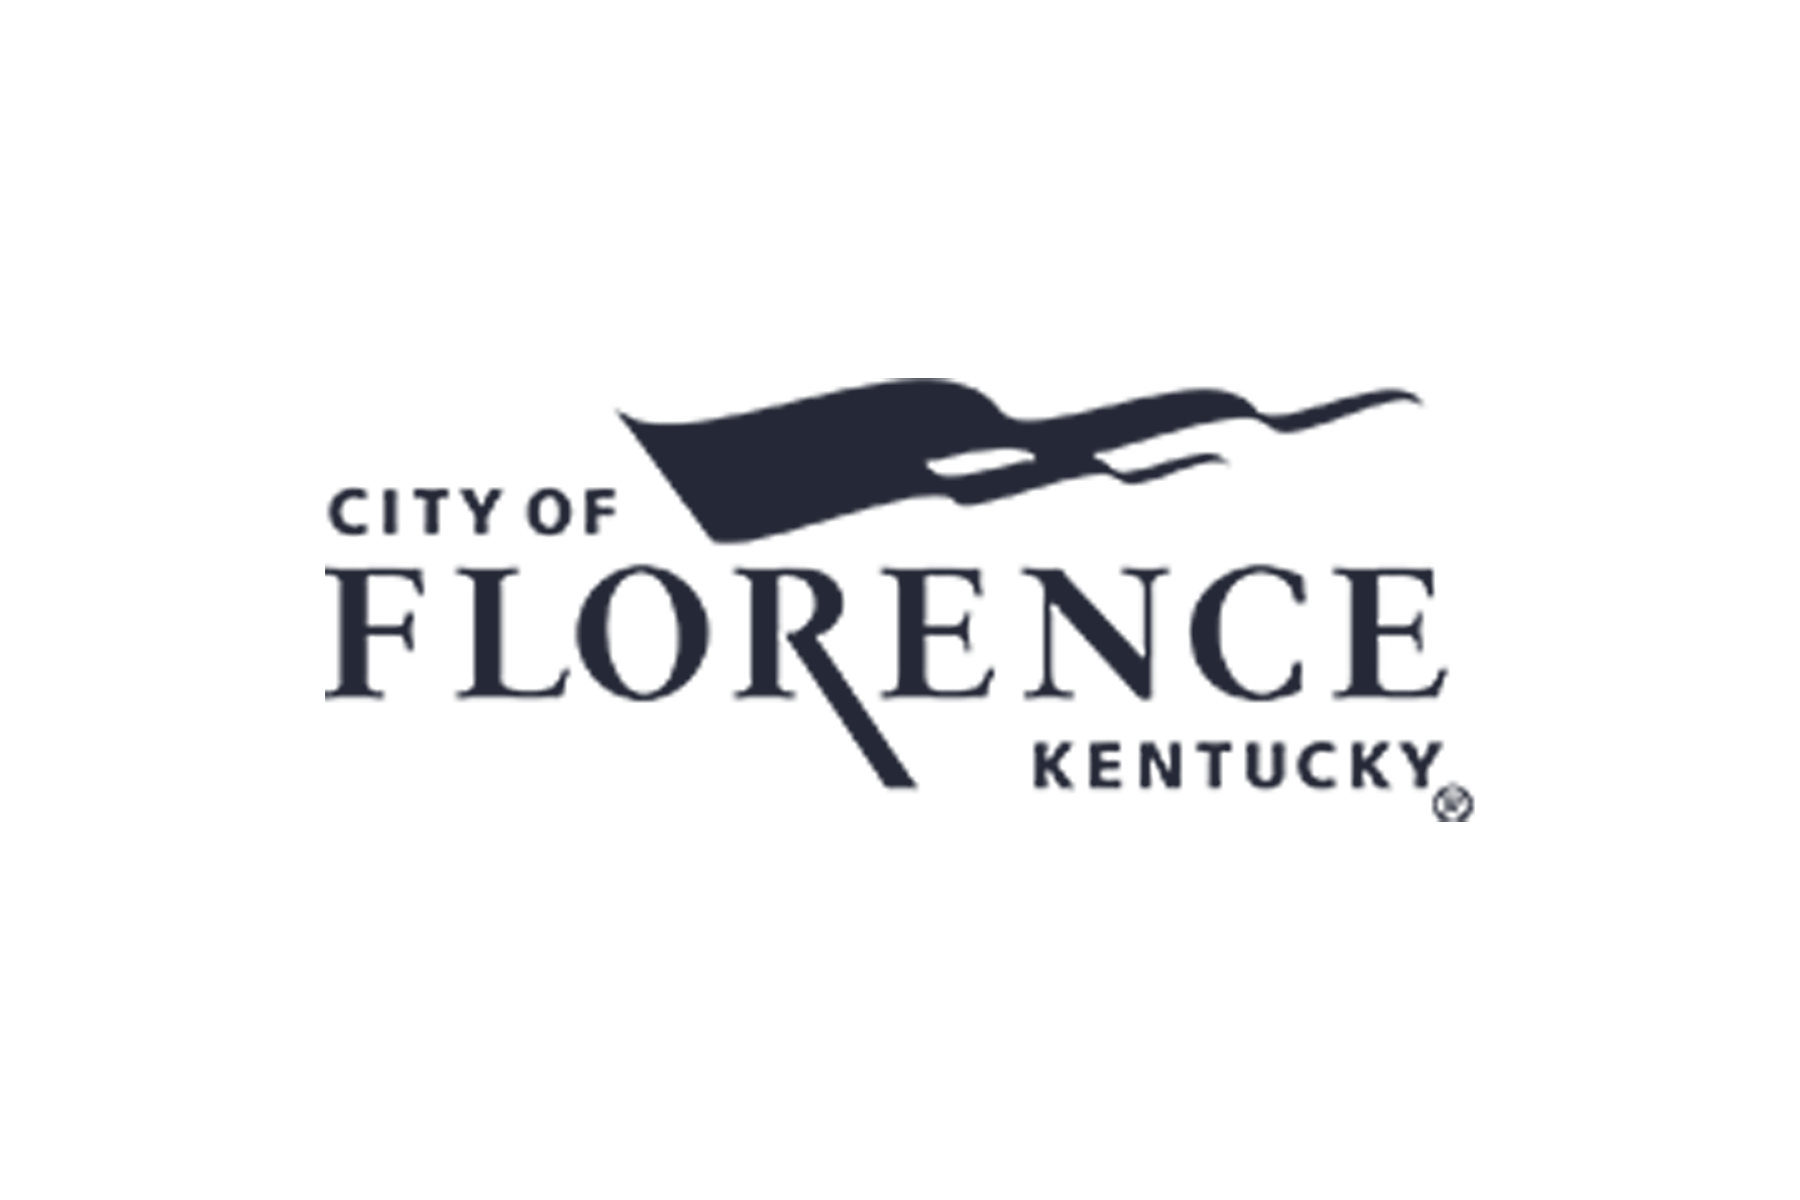 City of Florence Kentucky (Copy)